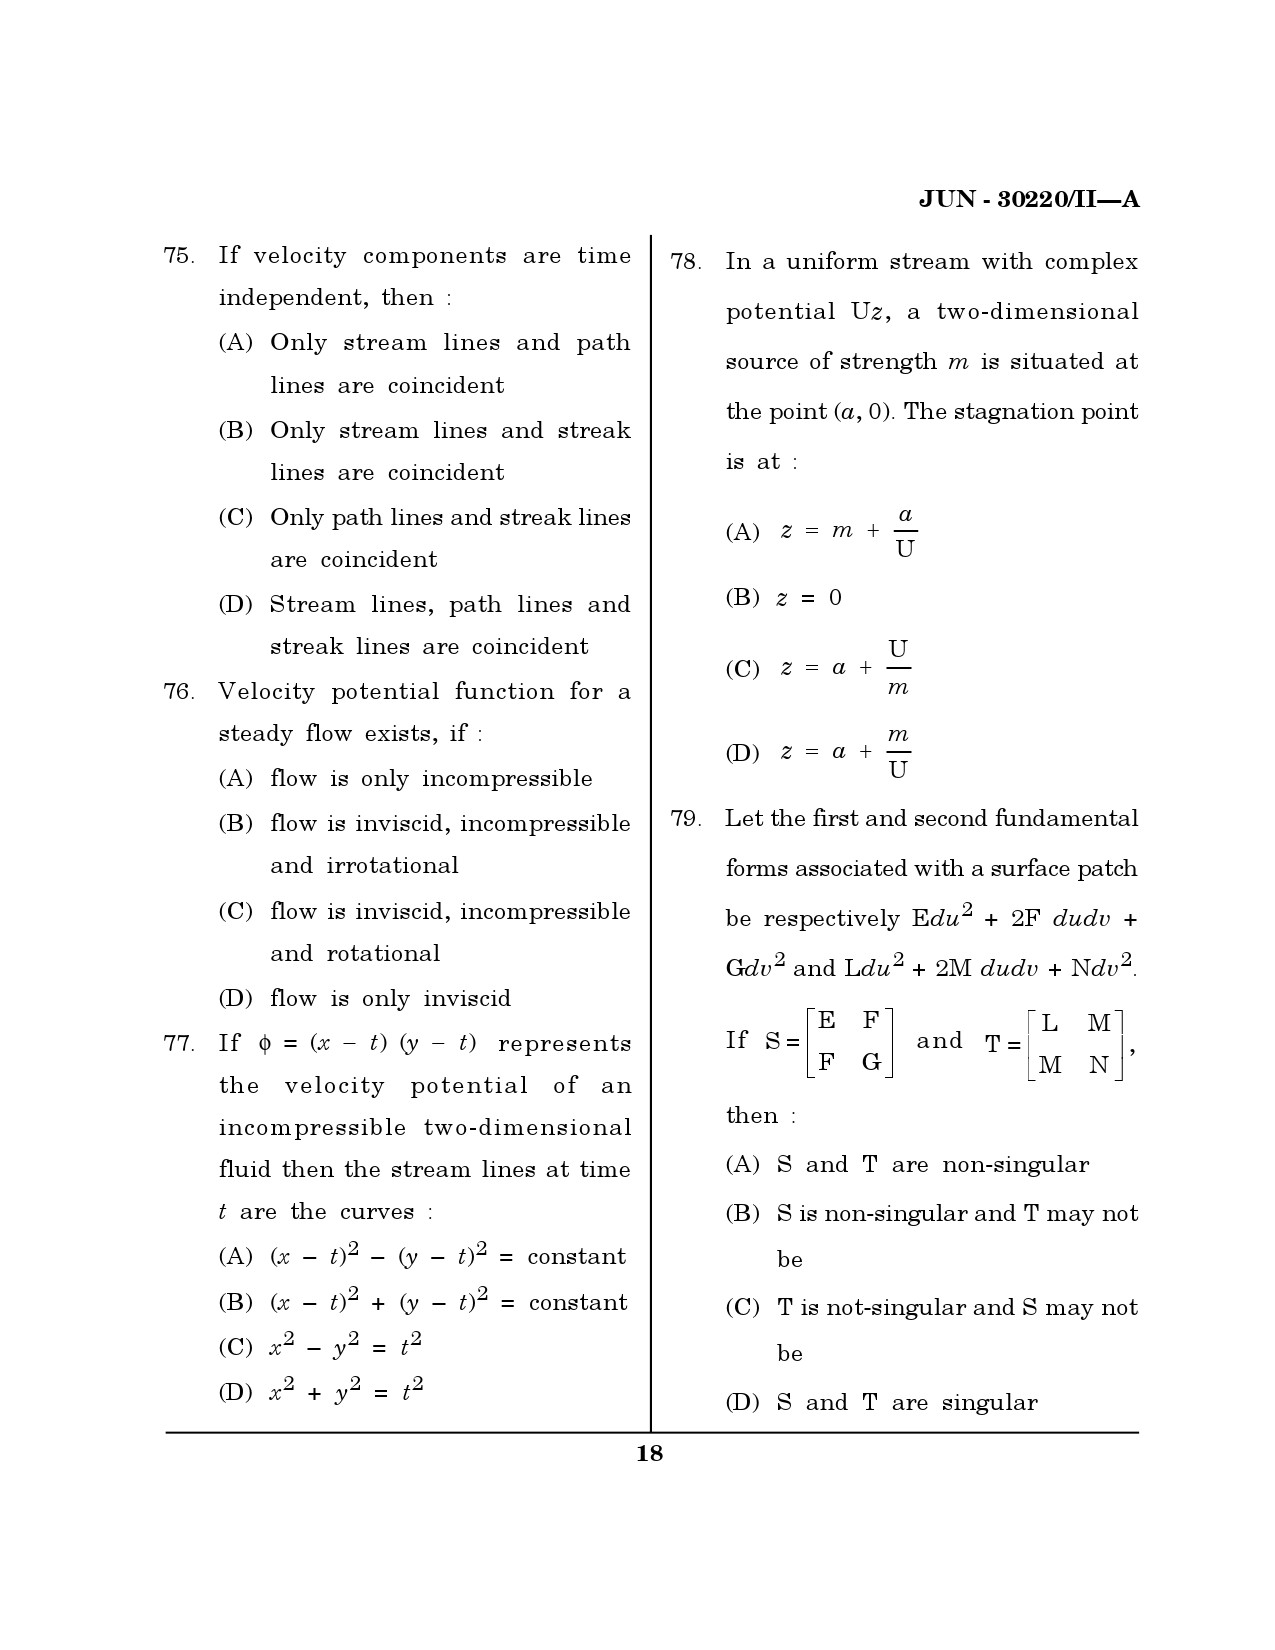 Maharashtra SET Mathematical Sciences Question Paper II June 2020 17